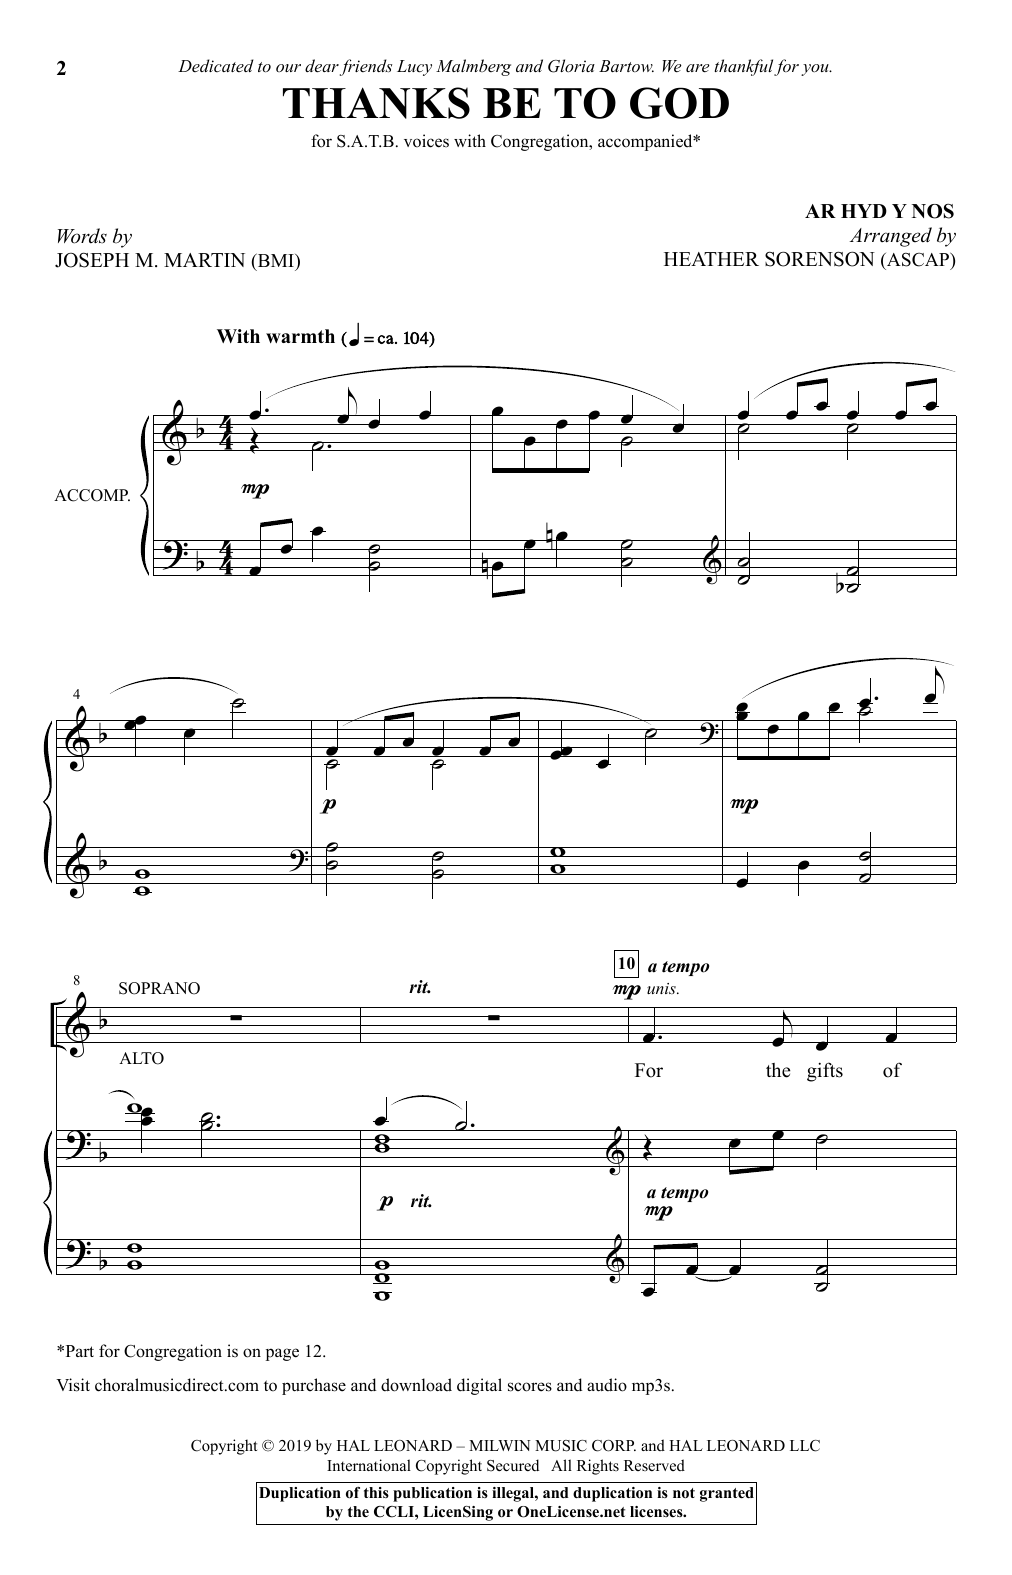 Joseph M. Martin Thanks Be To God (arr. Heather Sorenson) Sheet Music Notes & Chords for SATB Choir - Download or Print PDF